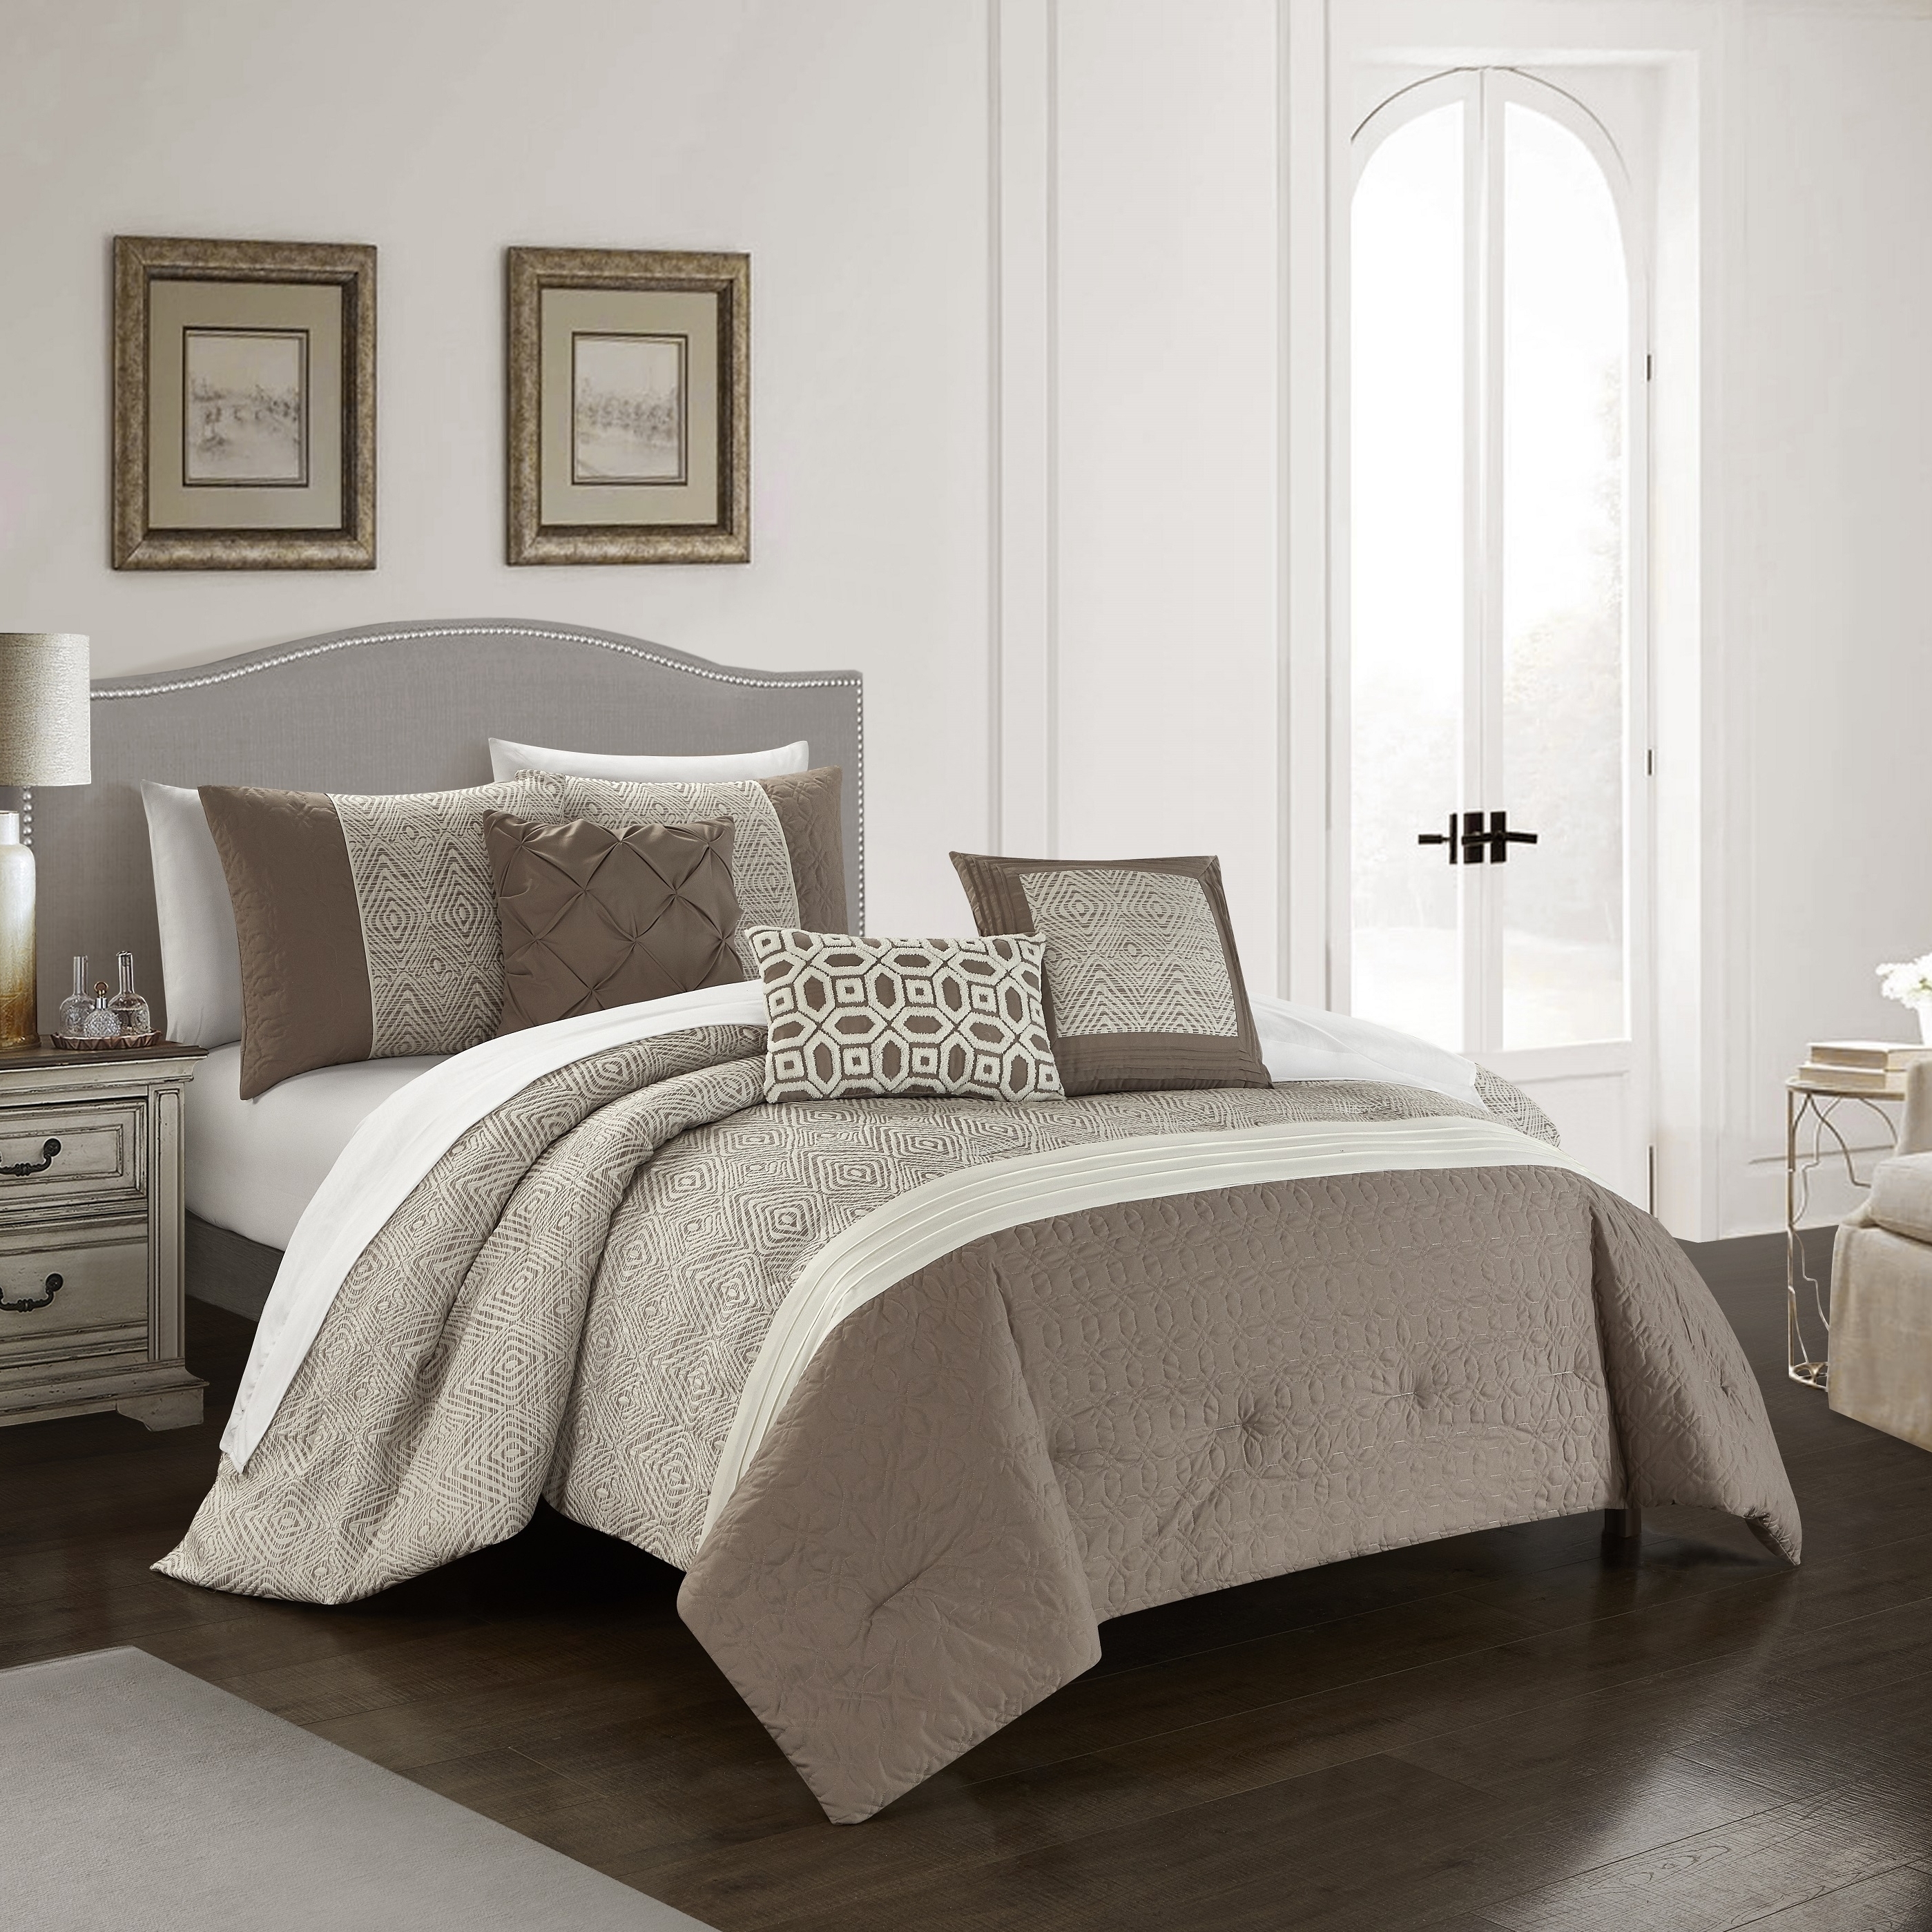 Malda 6 Piece Comforter Set Jacquard Geometric Diamond Pattern Color Block Design Bedding - Grey, King